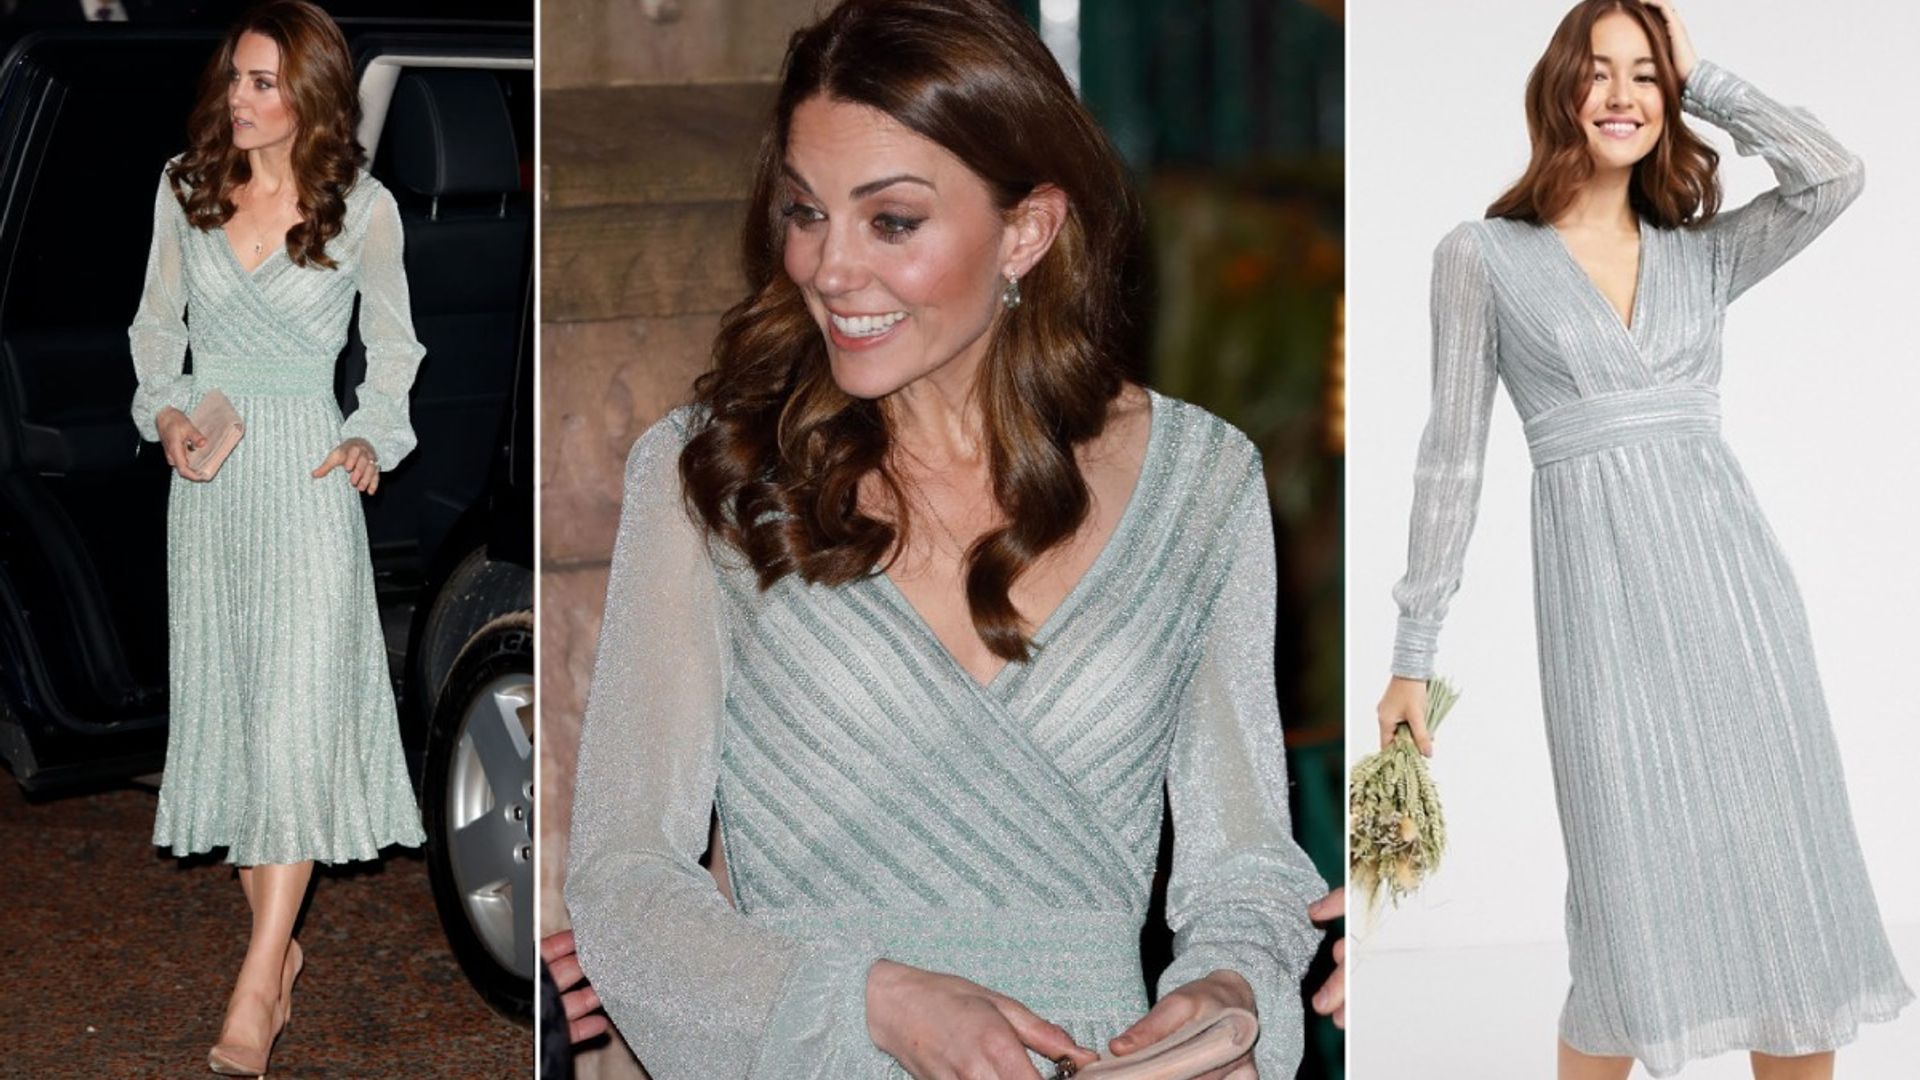 This sparkling ASOS dress is a dead ringer for Kate Middleton's Missoni number